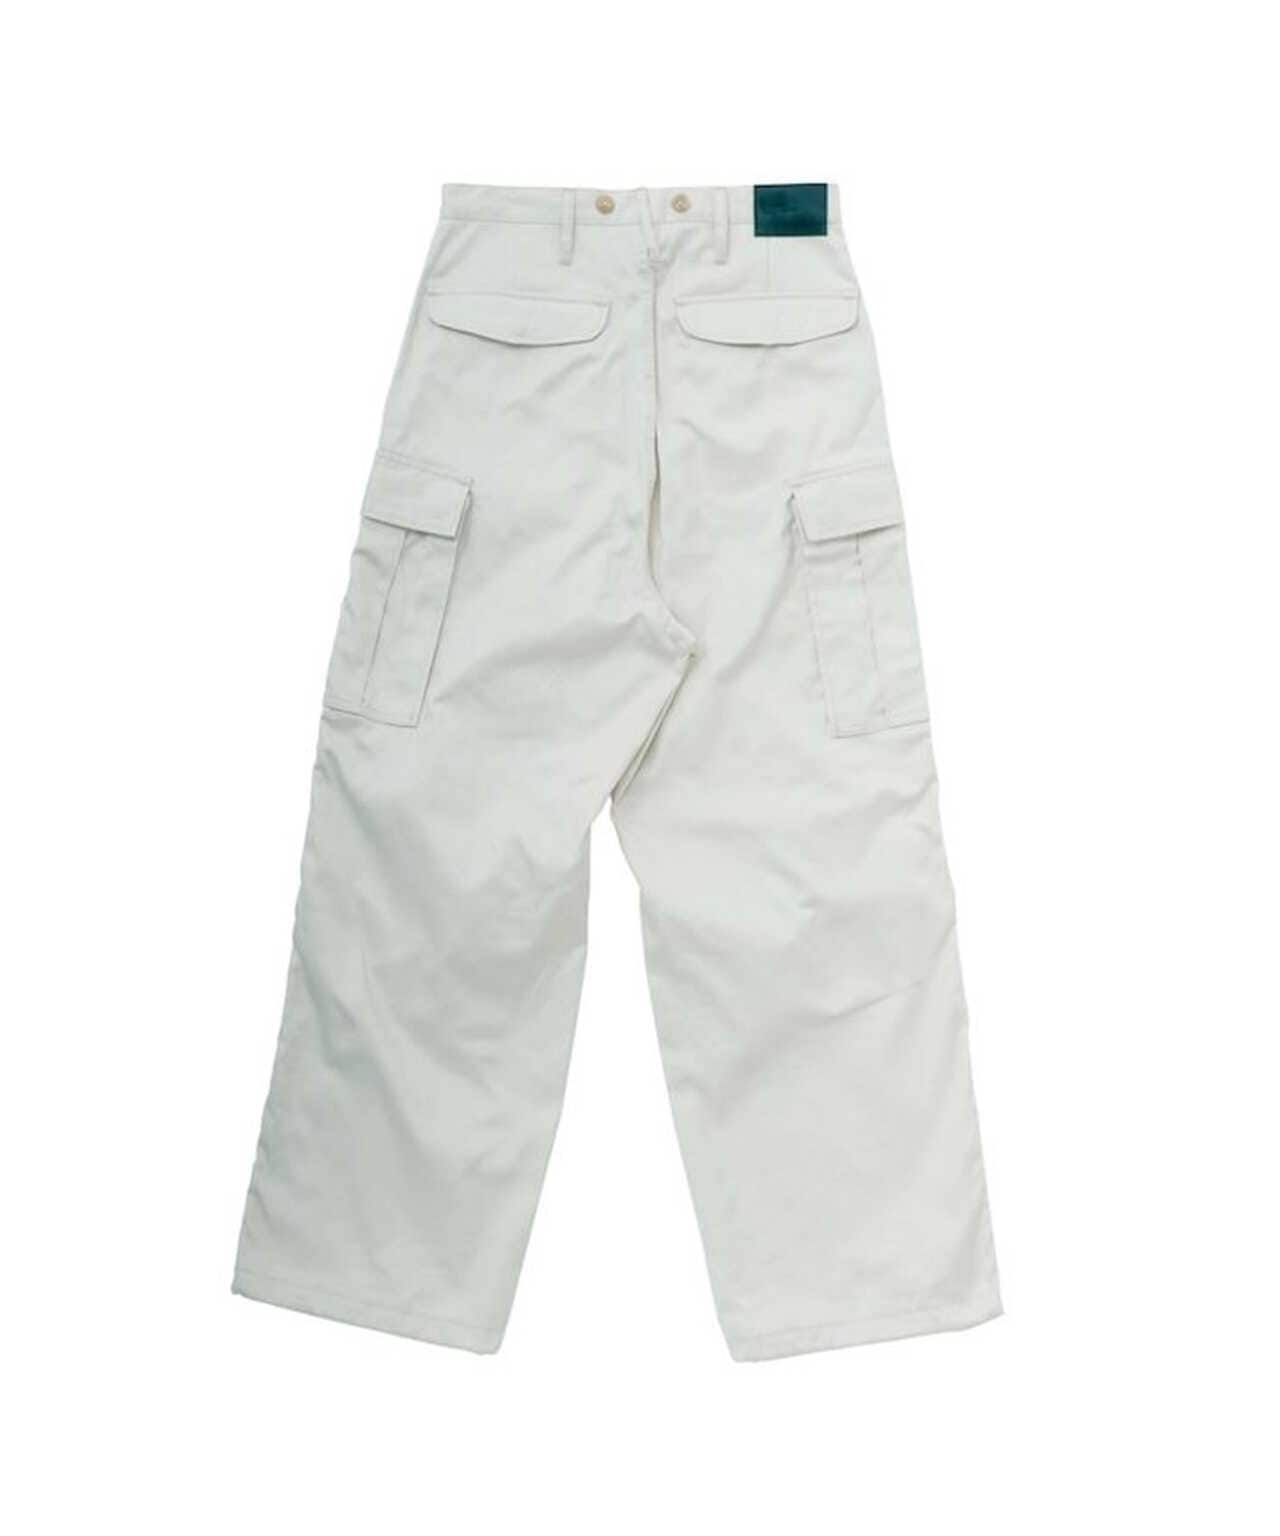 Sugarhill cargo pants